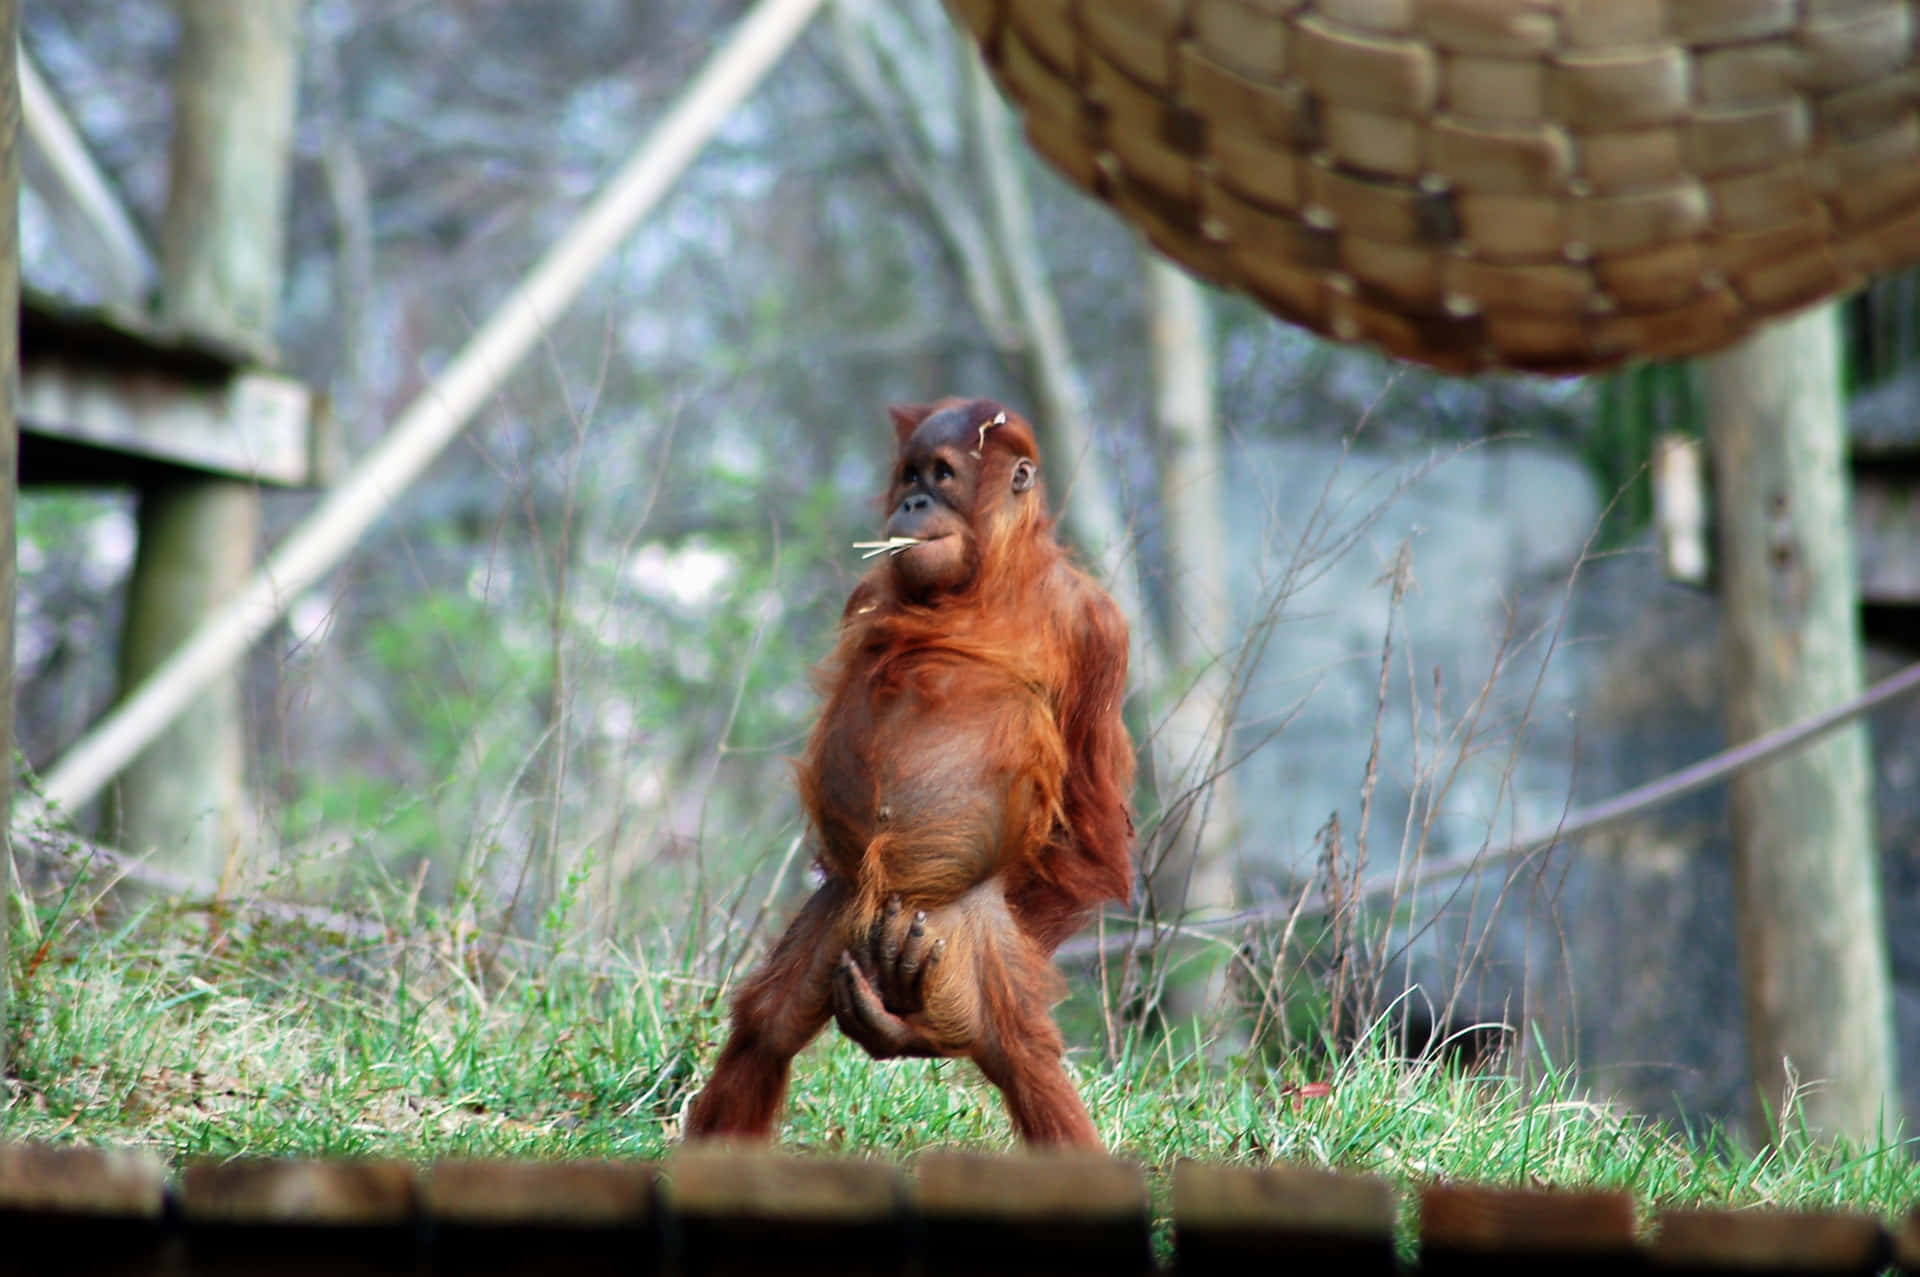 A funny orangutan showcasing its long arms in the wild. Wallpaper